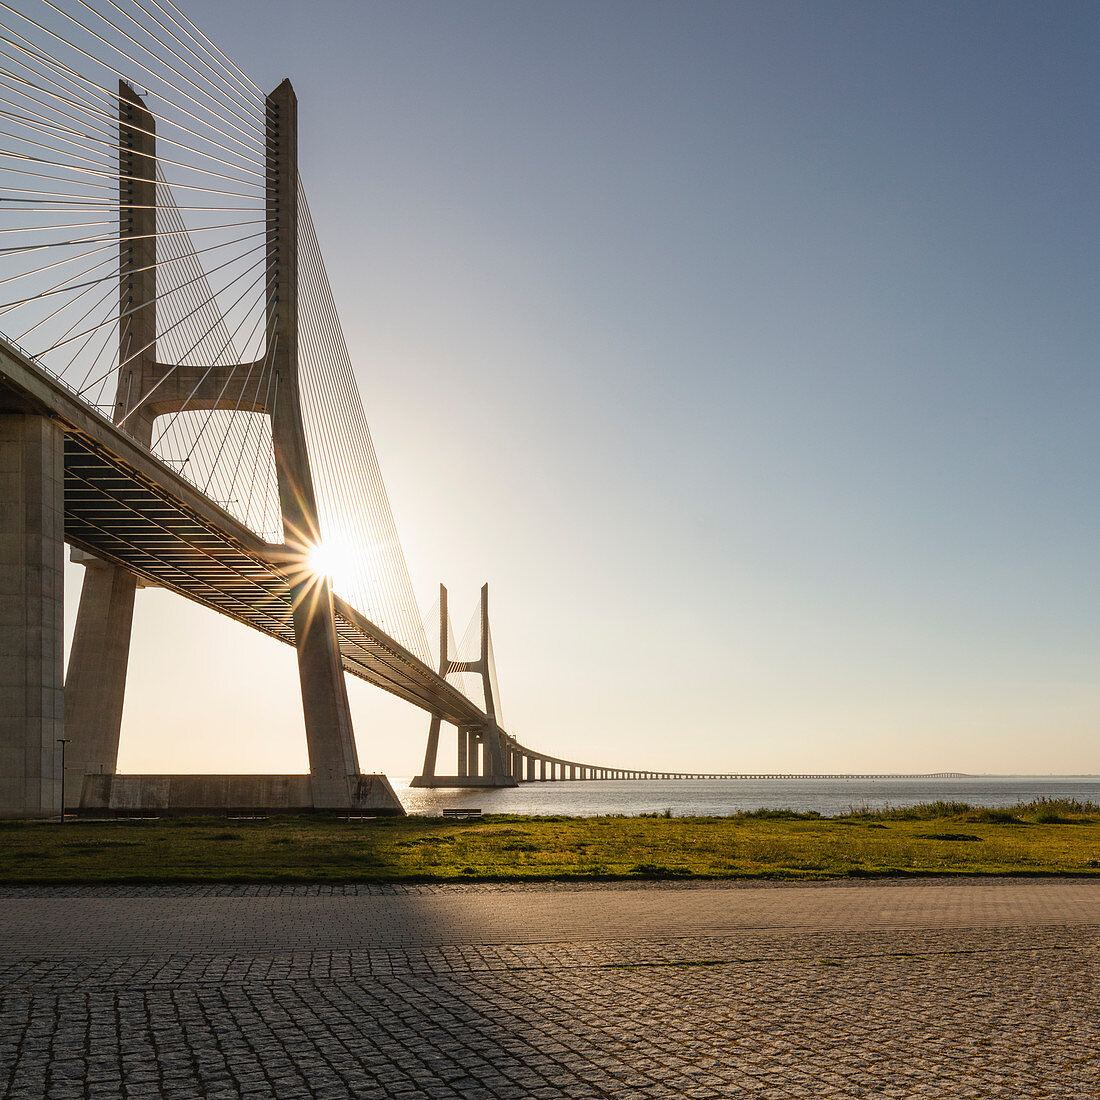 View of the empty Ponte Vasco da Gama, Lisbon, Portugal during the Corona virus crisis.